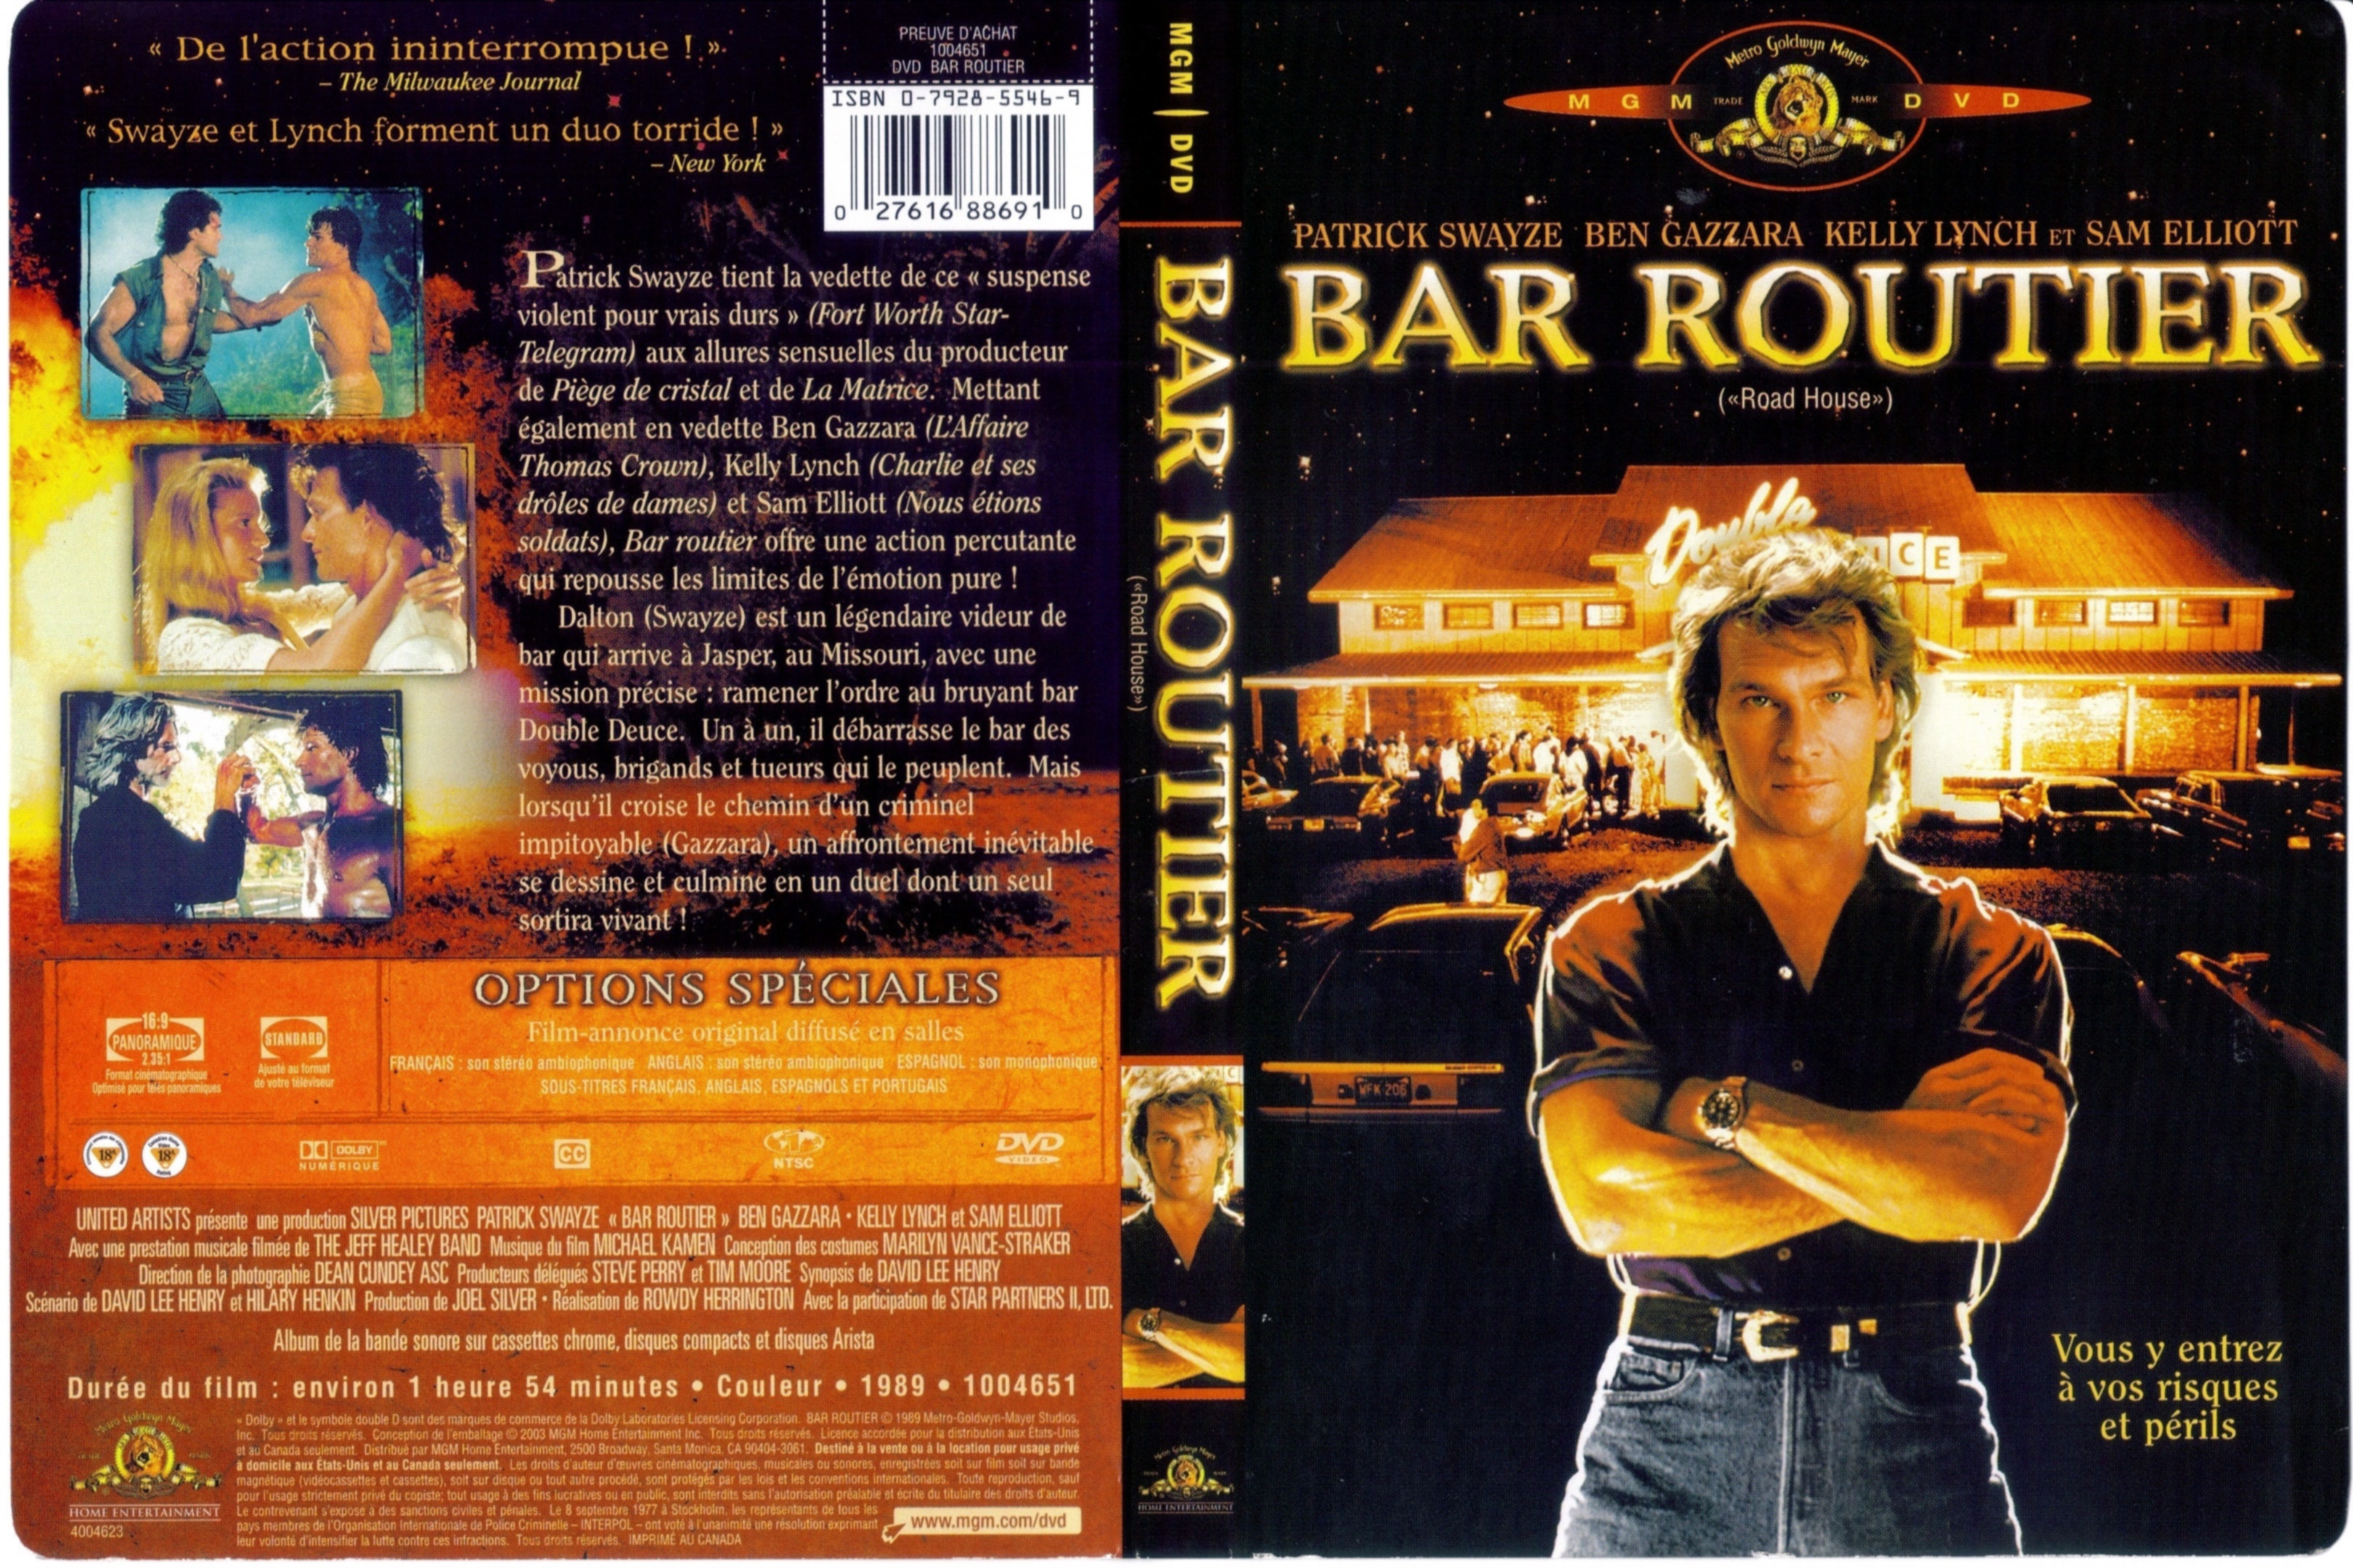 Jaquette DVD Bar routier - Road house (Canadienne)